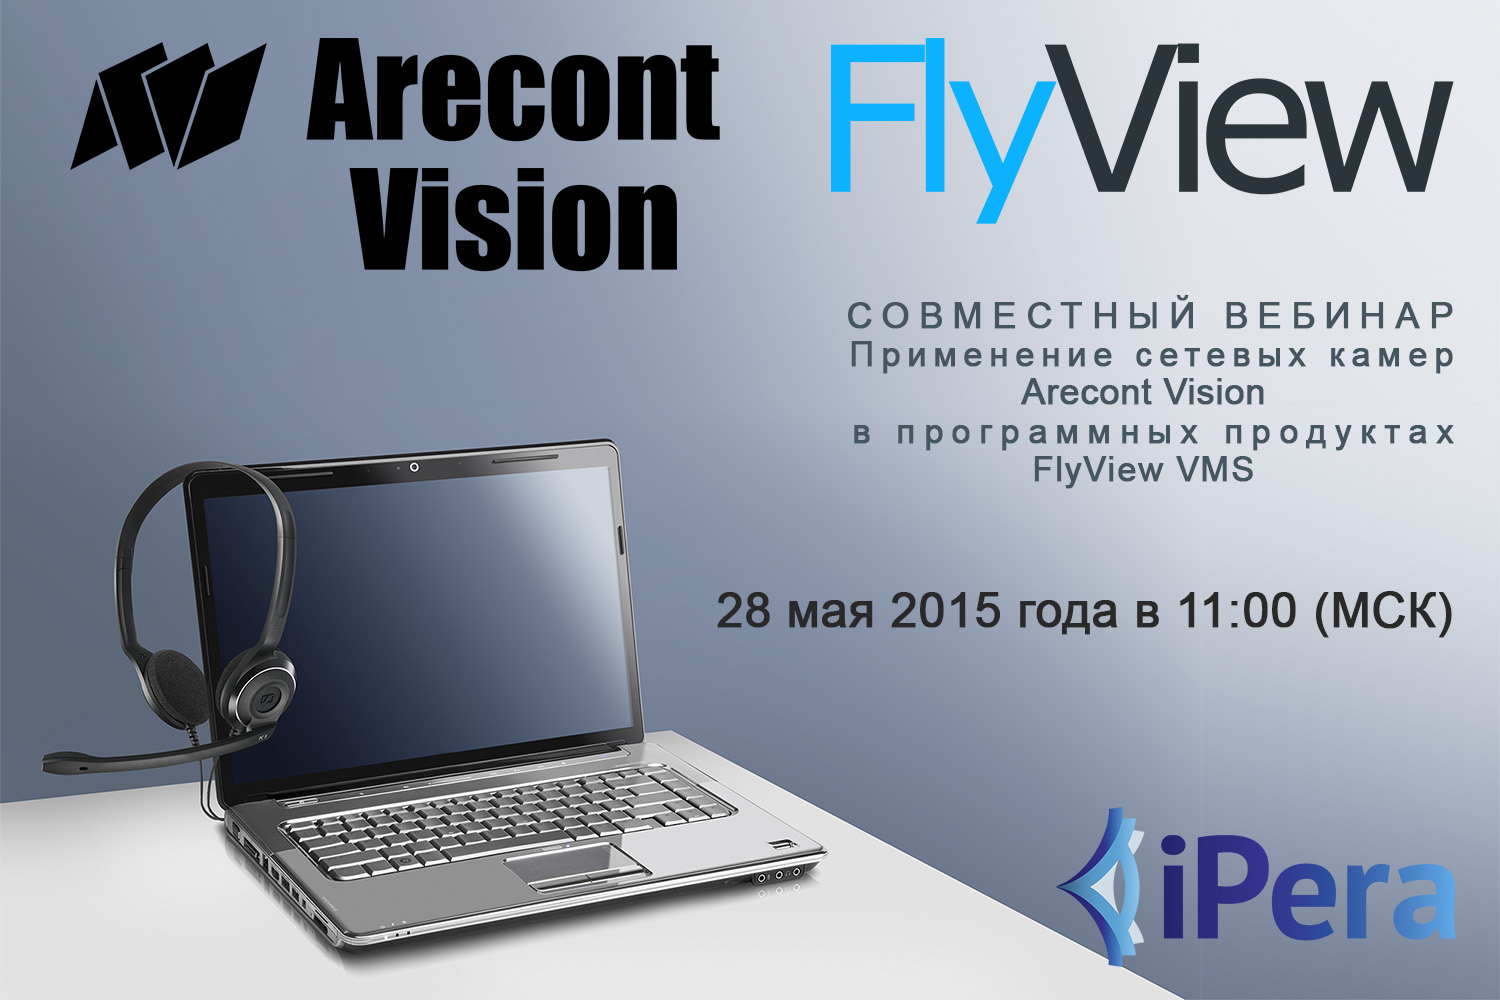 Arecont FlyView iPera 05.2015.jpg